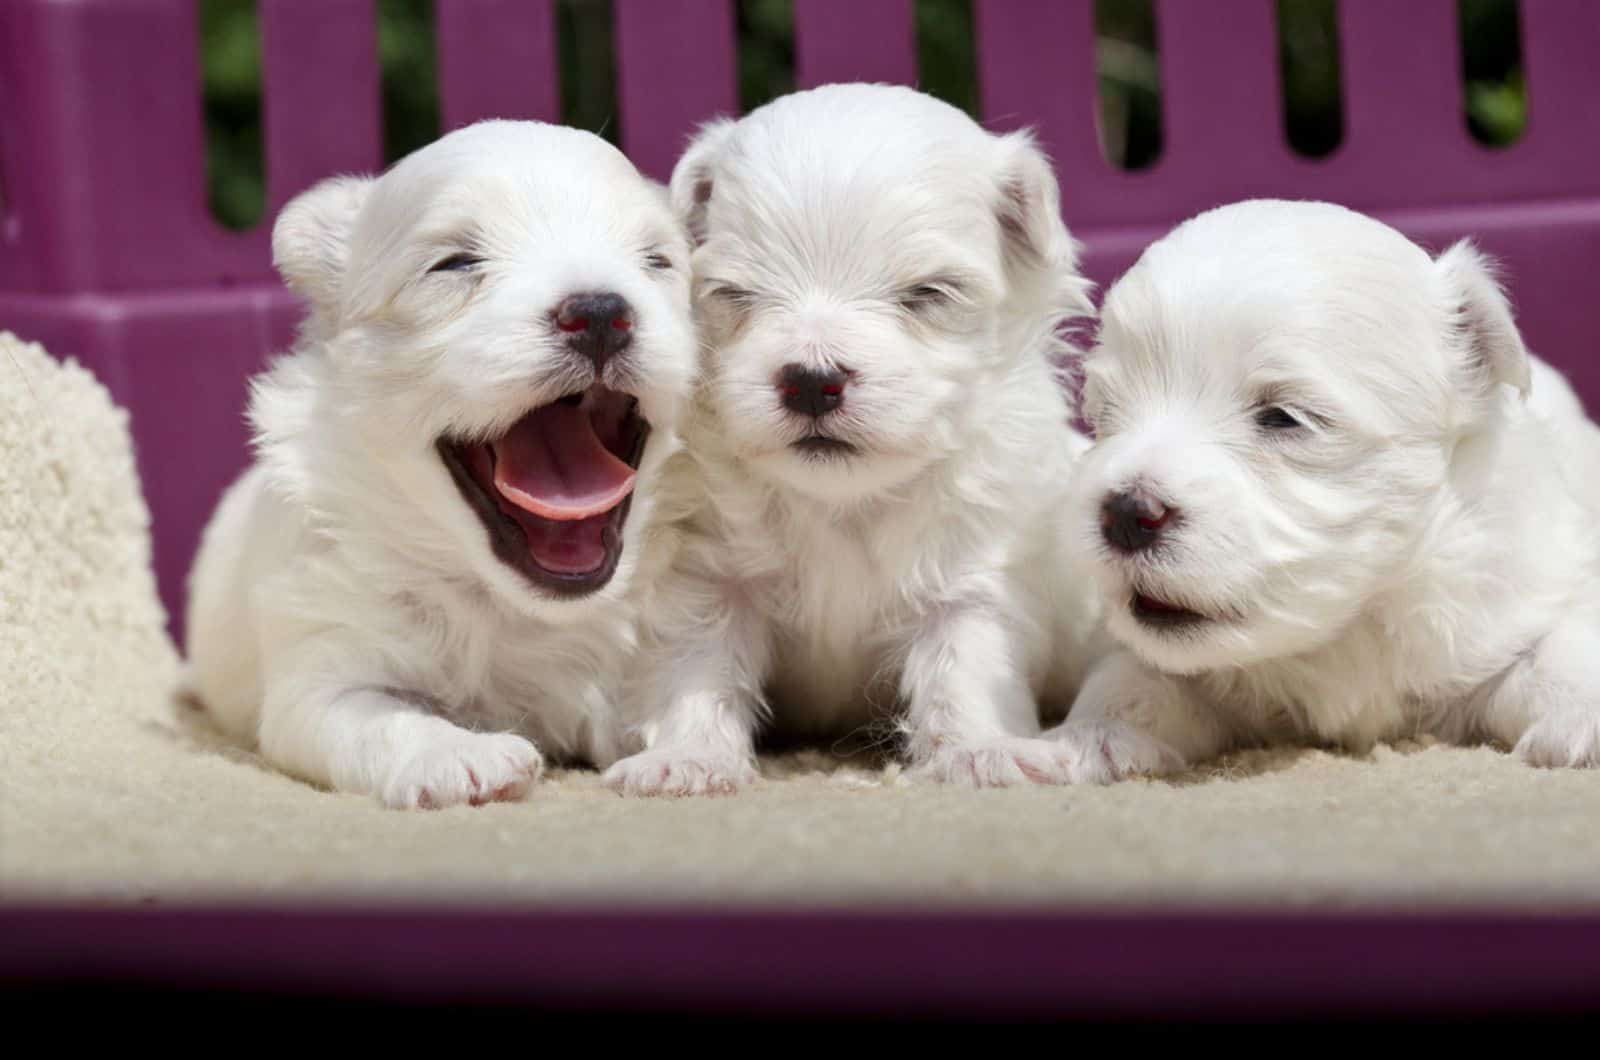 three maltese puppies sitting together